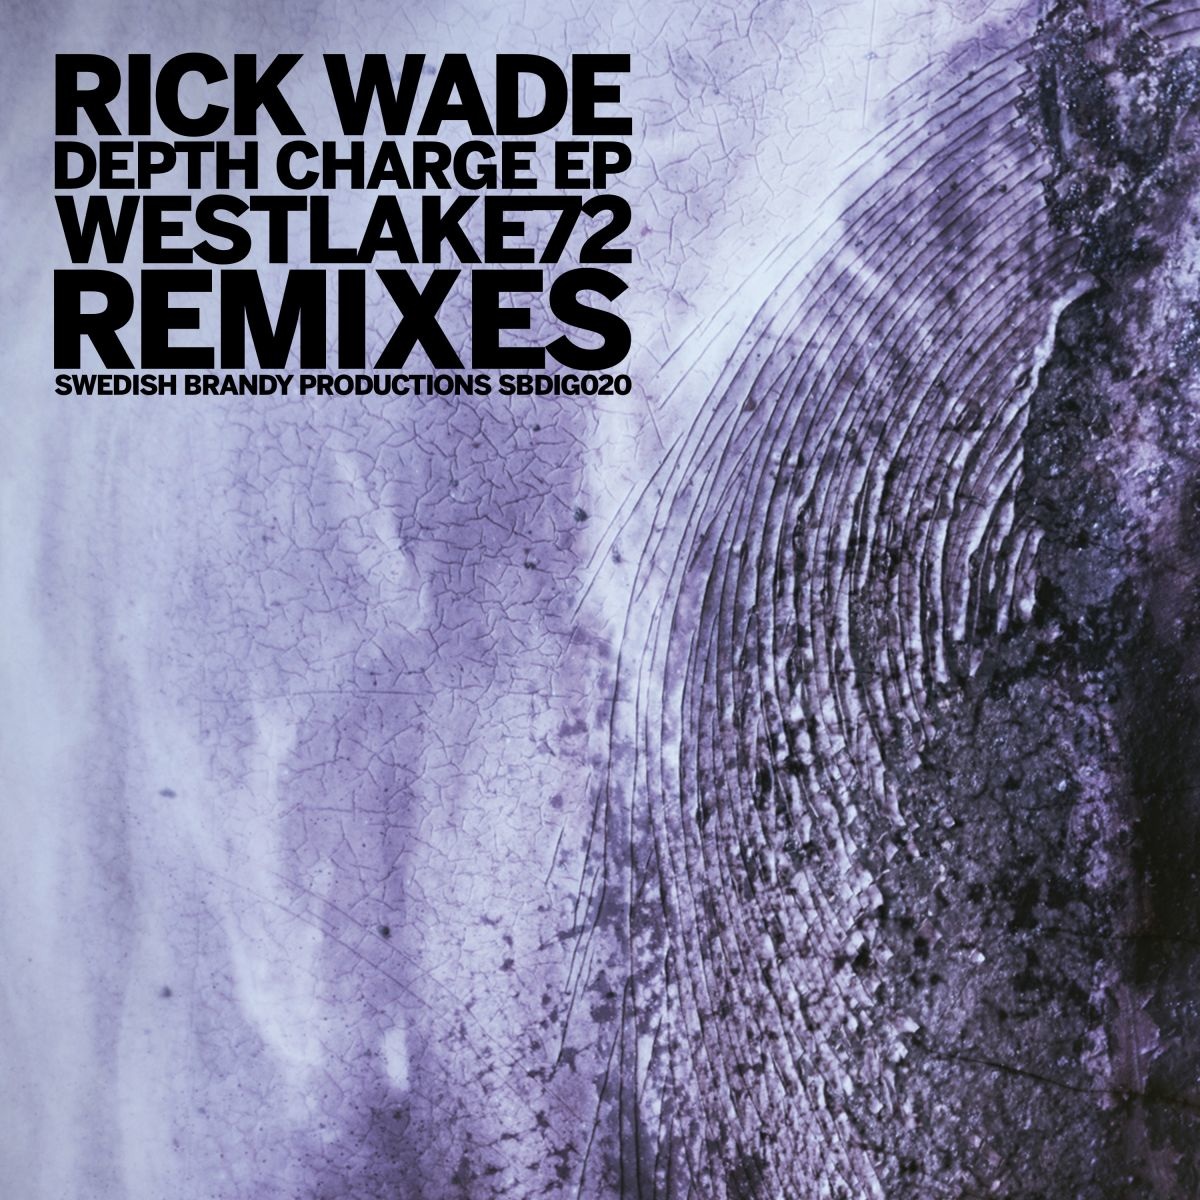 Rick Wade - Depth Charge (Westelake72 Remixes) / Swedish Brandy Productions